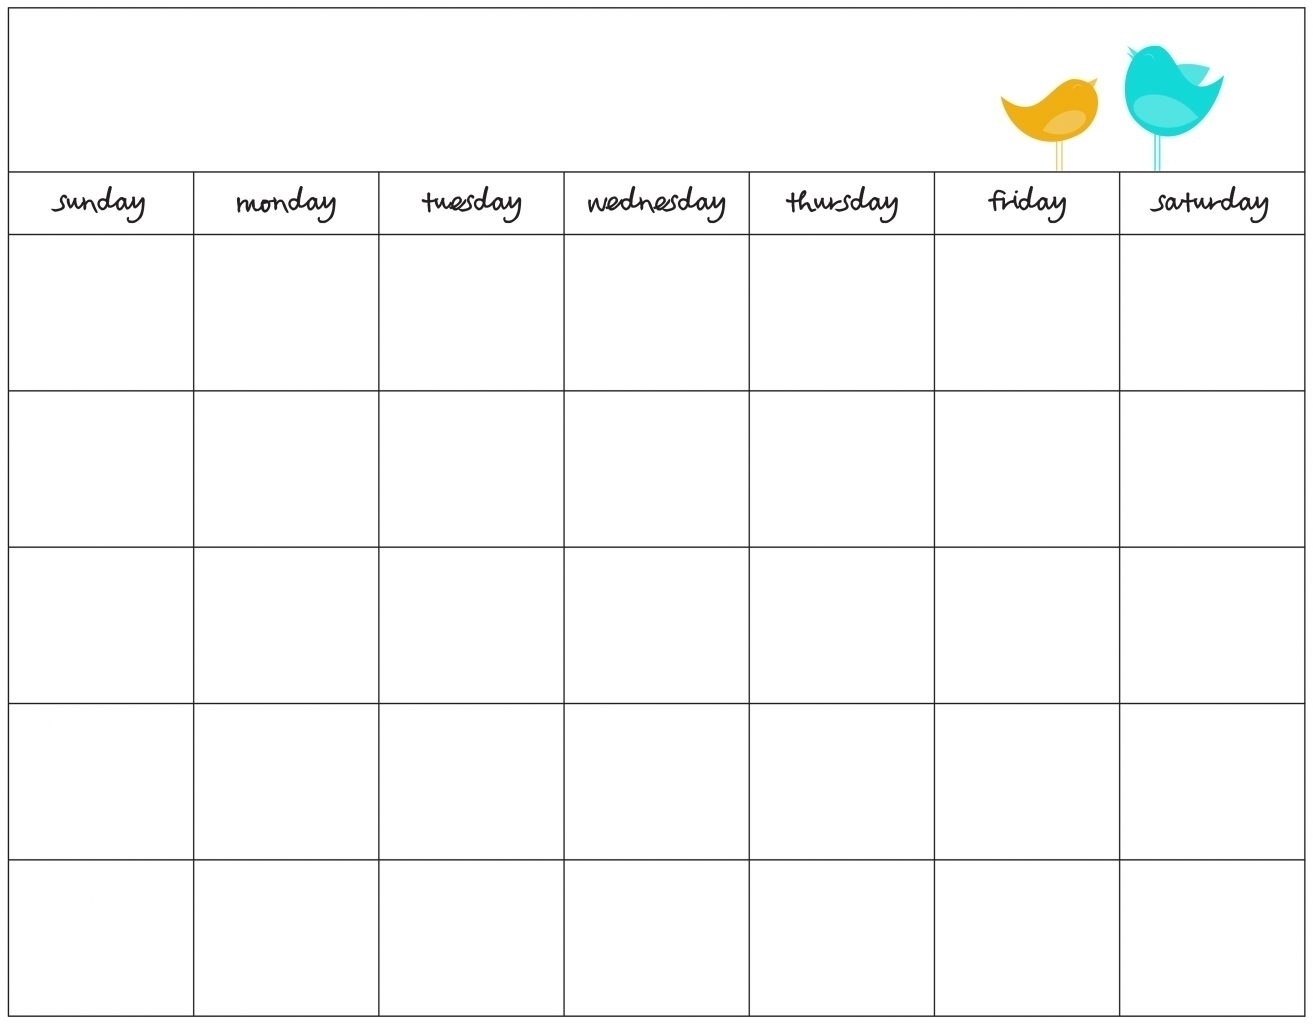 Schedule Template Day Week Calendar | Smorad in 7 Day A Week Calendar